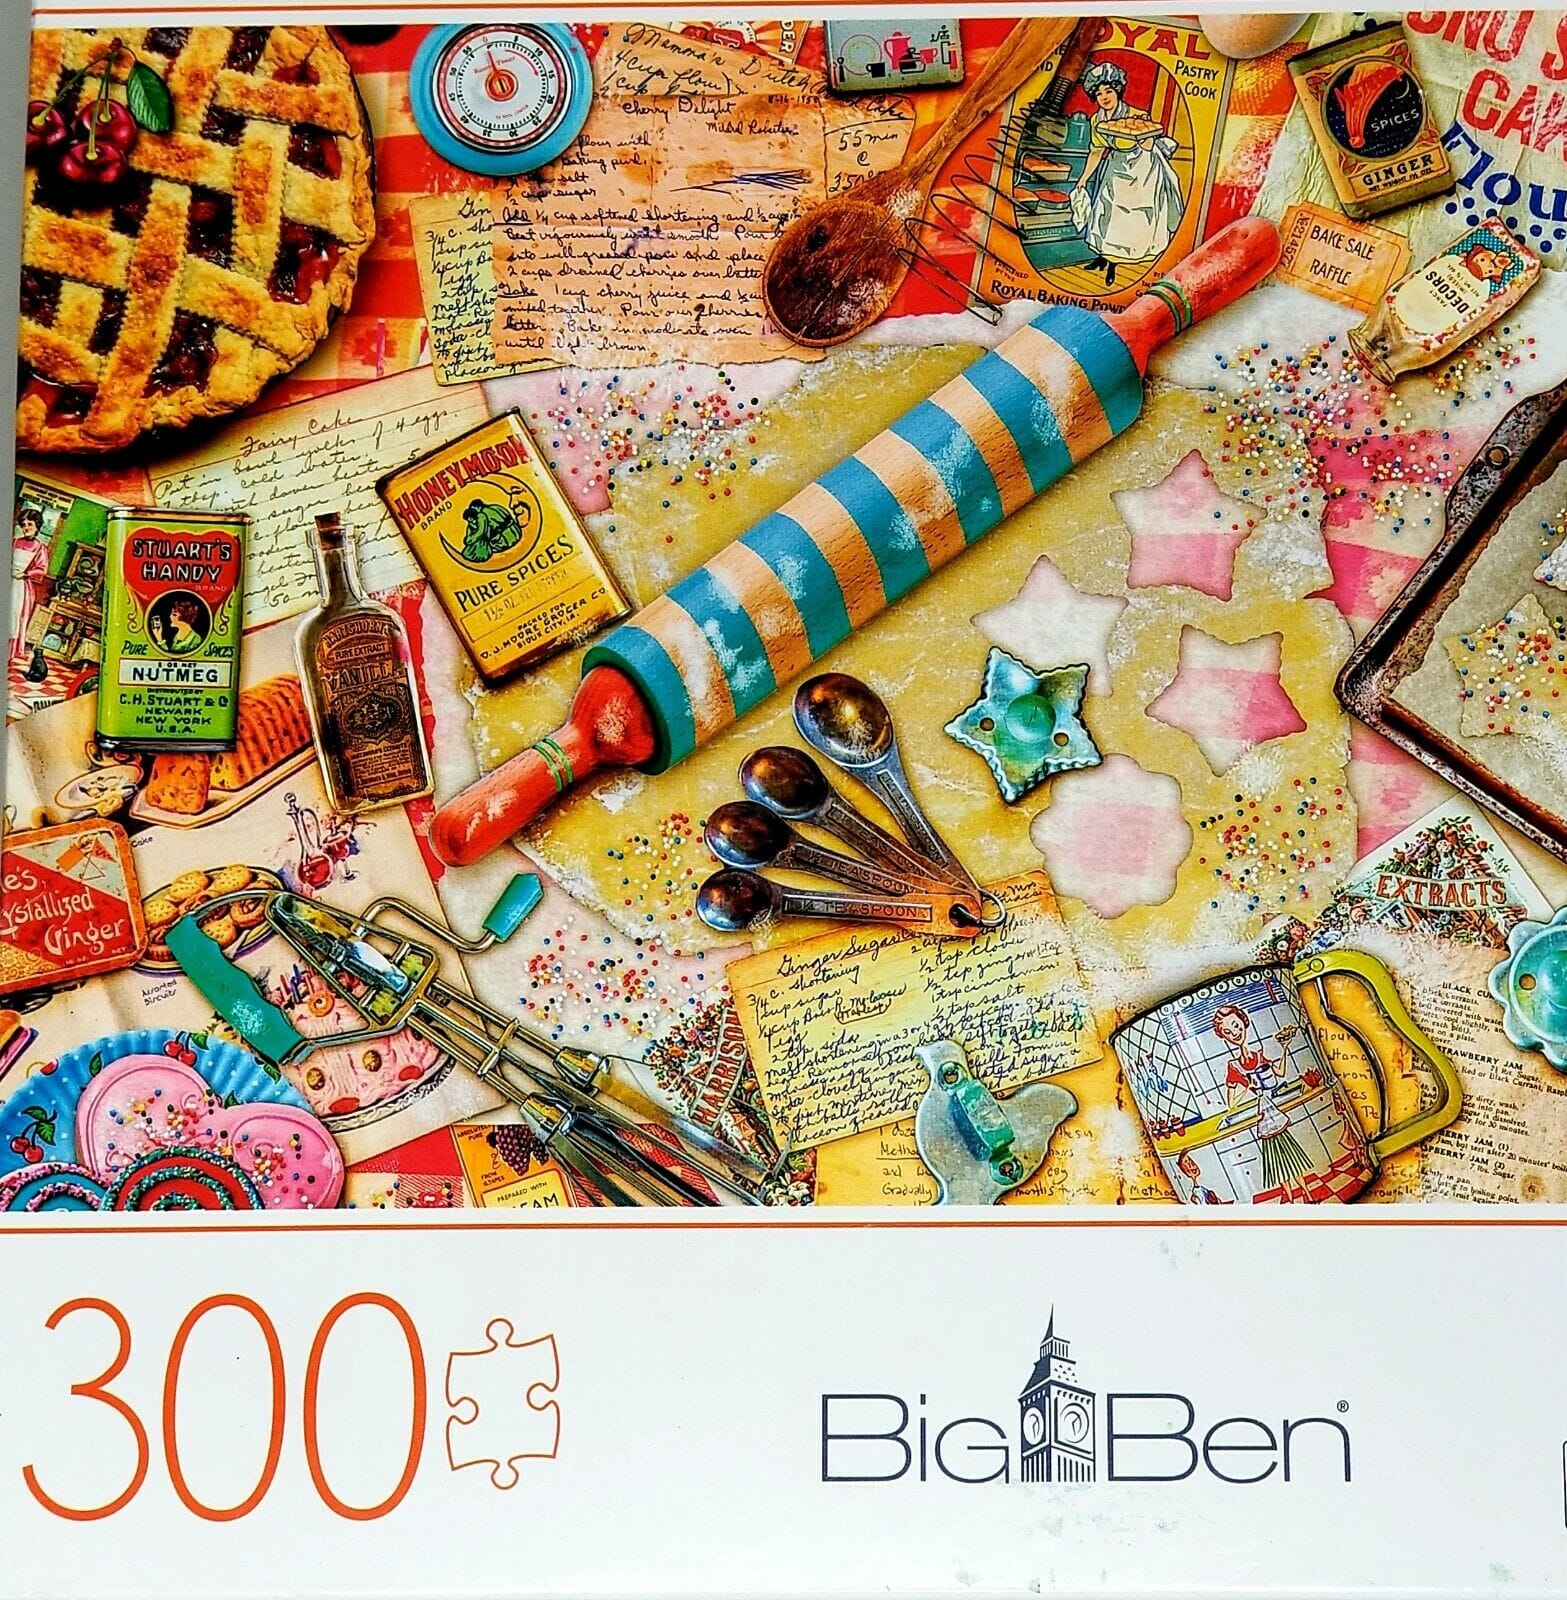 Big Ben 300-Piece Jigsaw Puzzle - Vintage Baker - Shelburne Country Store